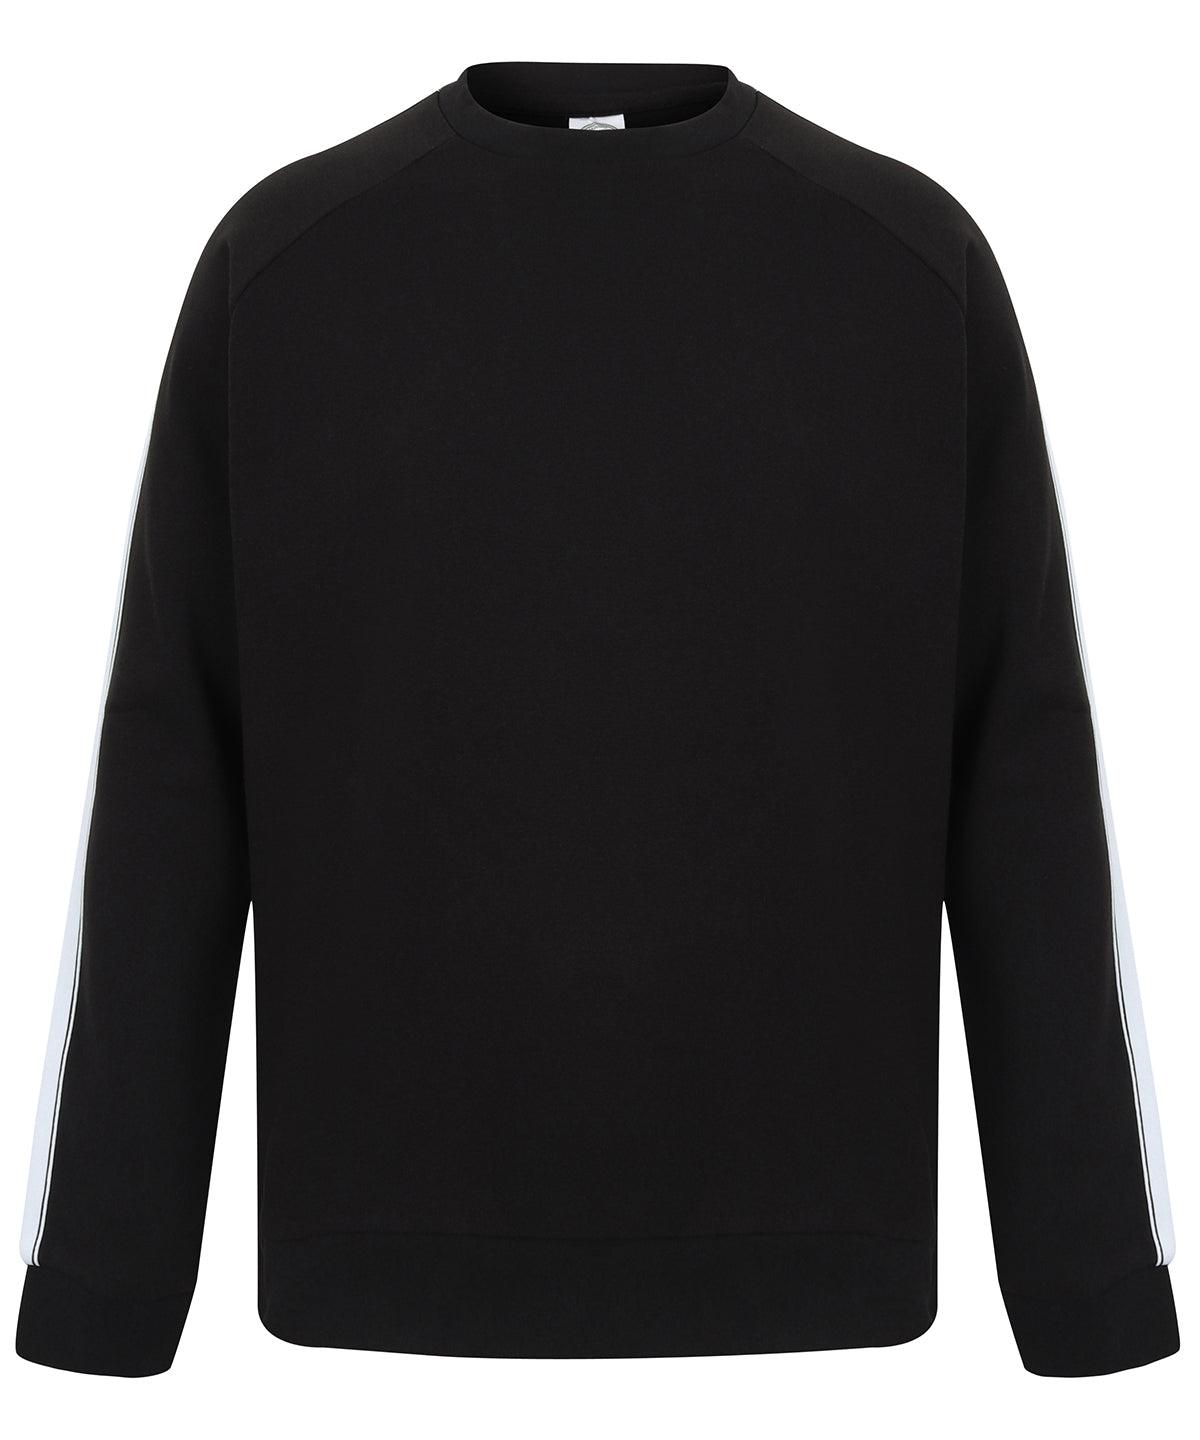 Black/White - Unisex contrast sweatshirt Sweatshirts SF Co-ords, Lounge Sets, Luxe Streetwear, Rebrandable, Street Casual, Streetwear, Sublimation, Sweatshirts, Tracksuits Schoolwear Centres